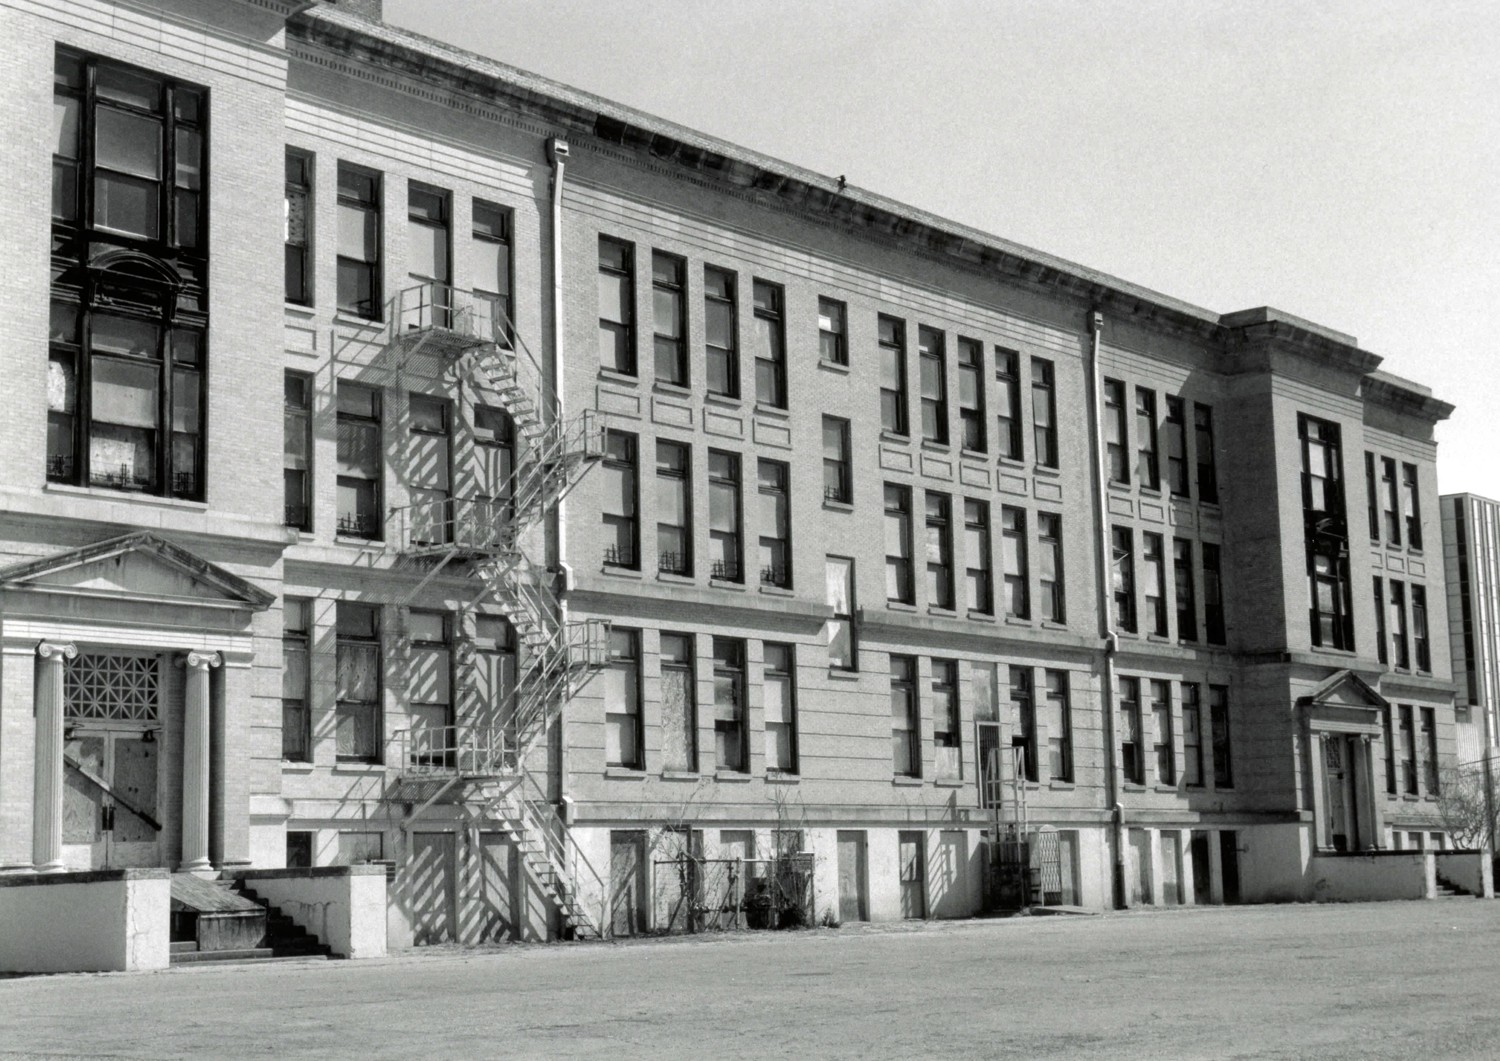 Waco High School, Waco Texas North 9th Street facade Camera facing east (2008)